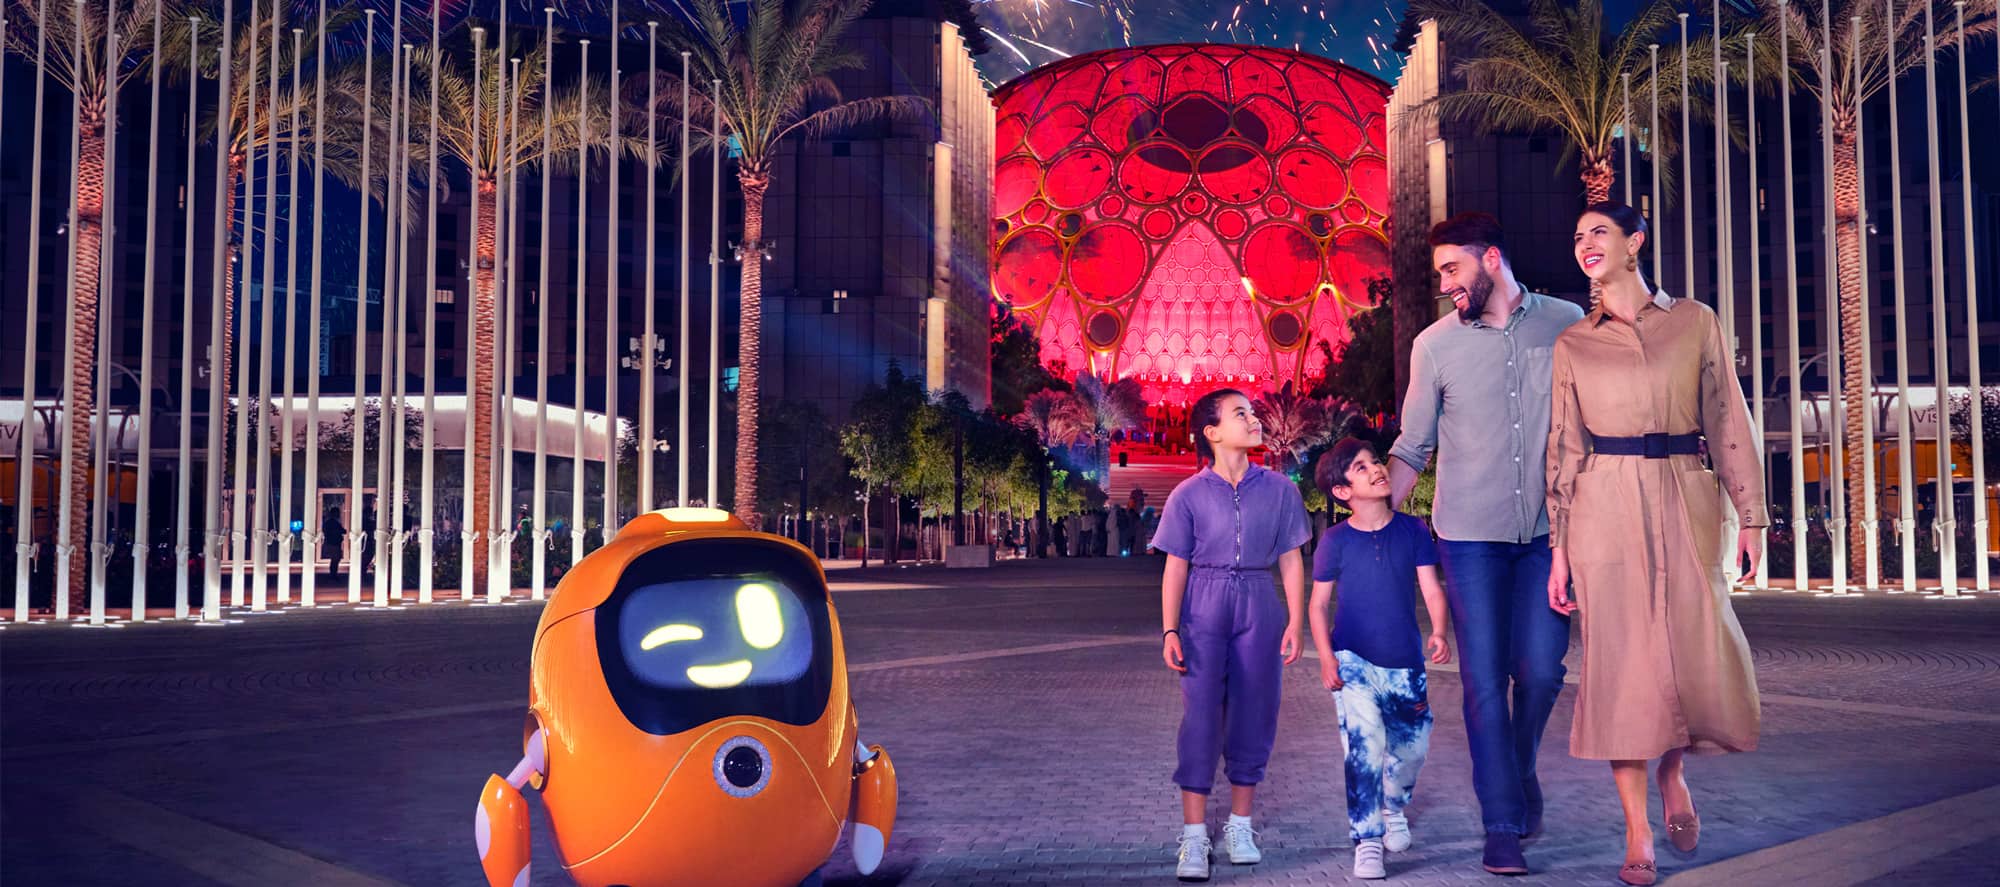 Dubai Expo 2020, Highlights of the World Expo